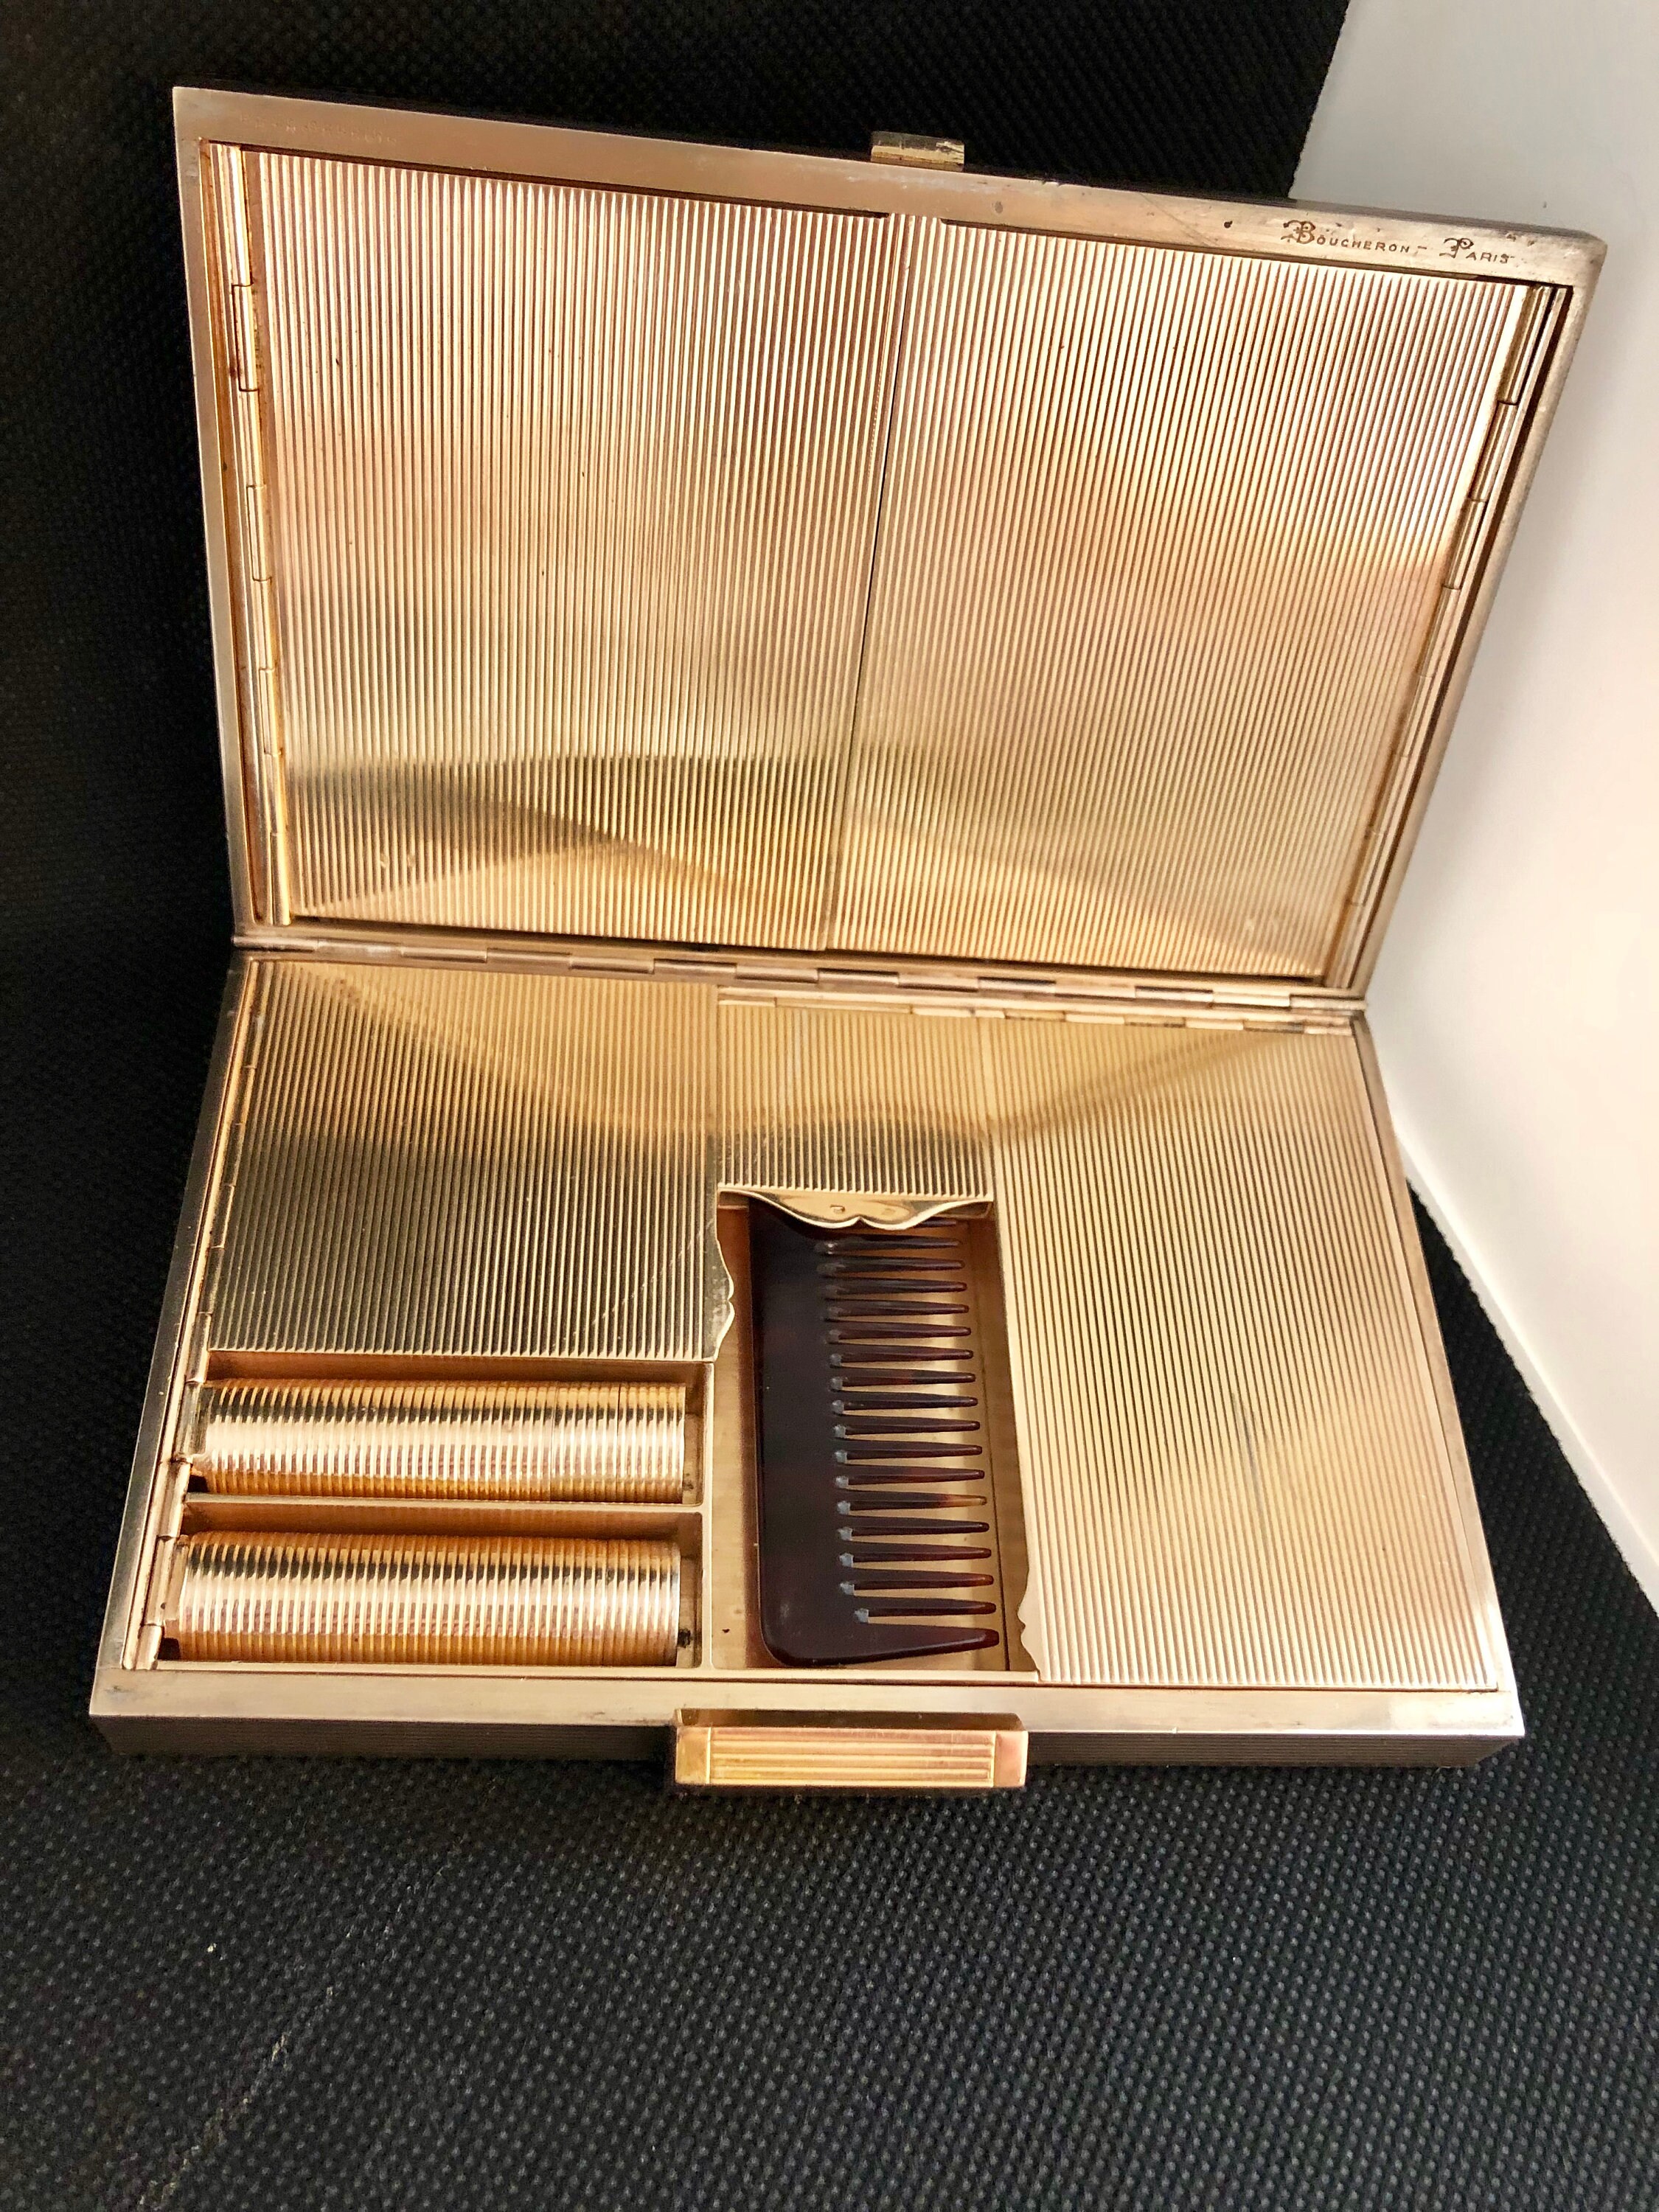 Van Cleef & Arpels 18K Antique Mirror Compact Box from 1930's